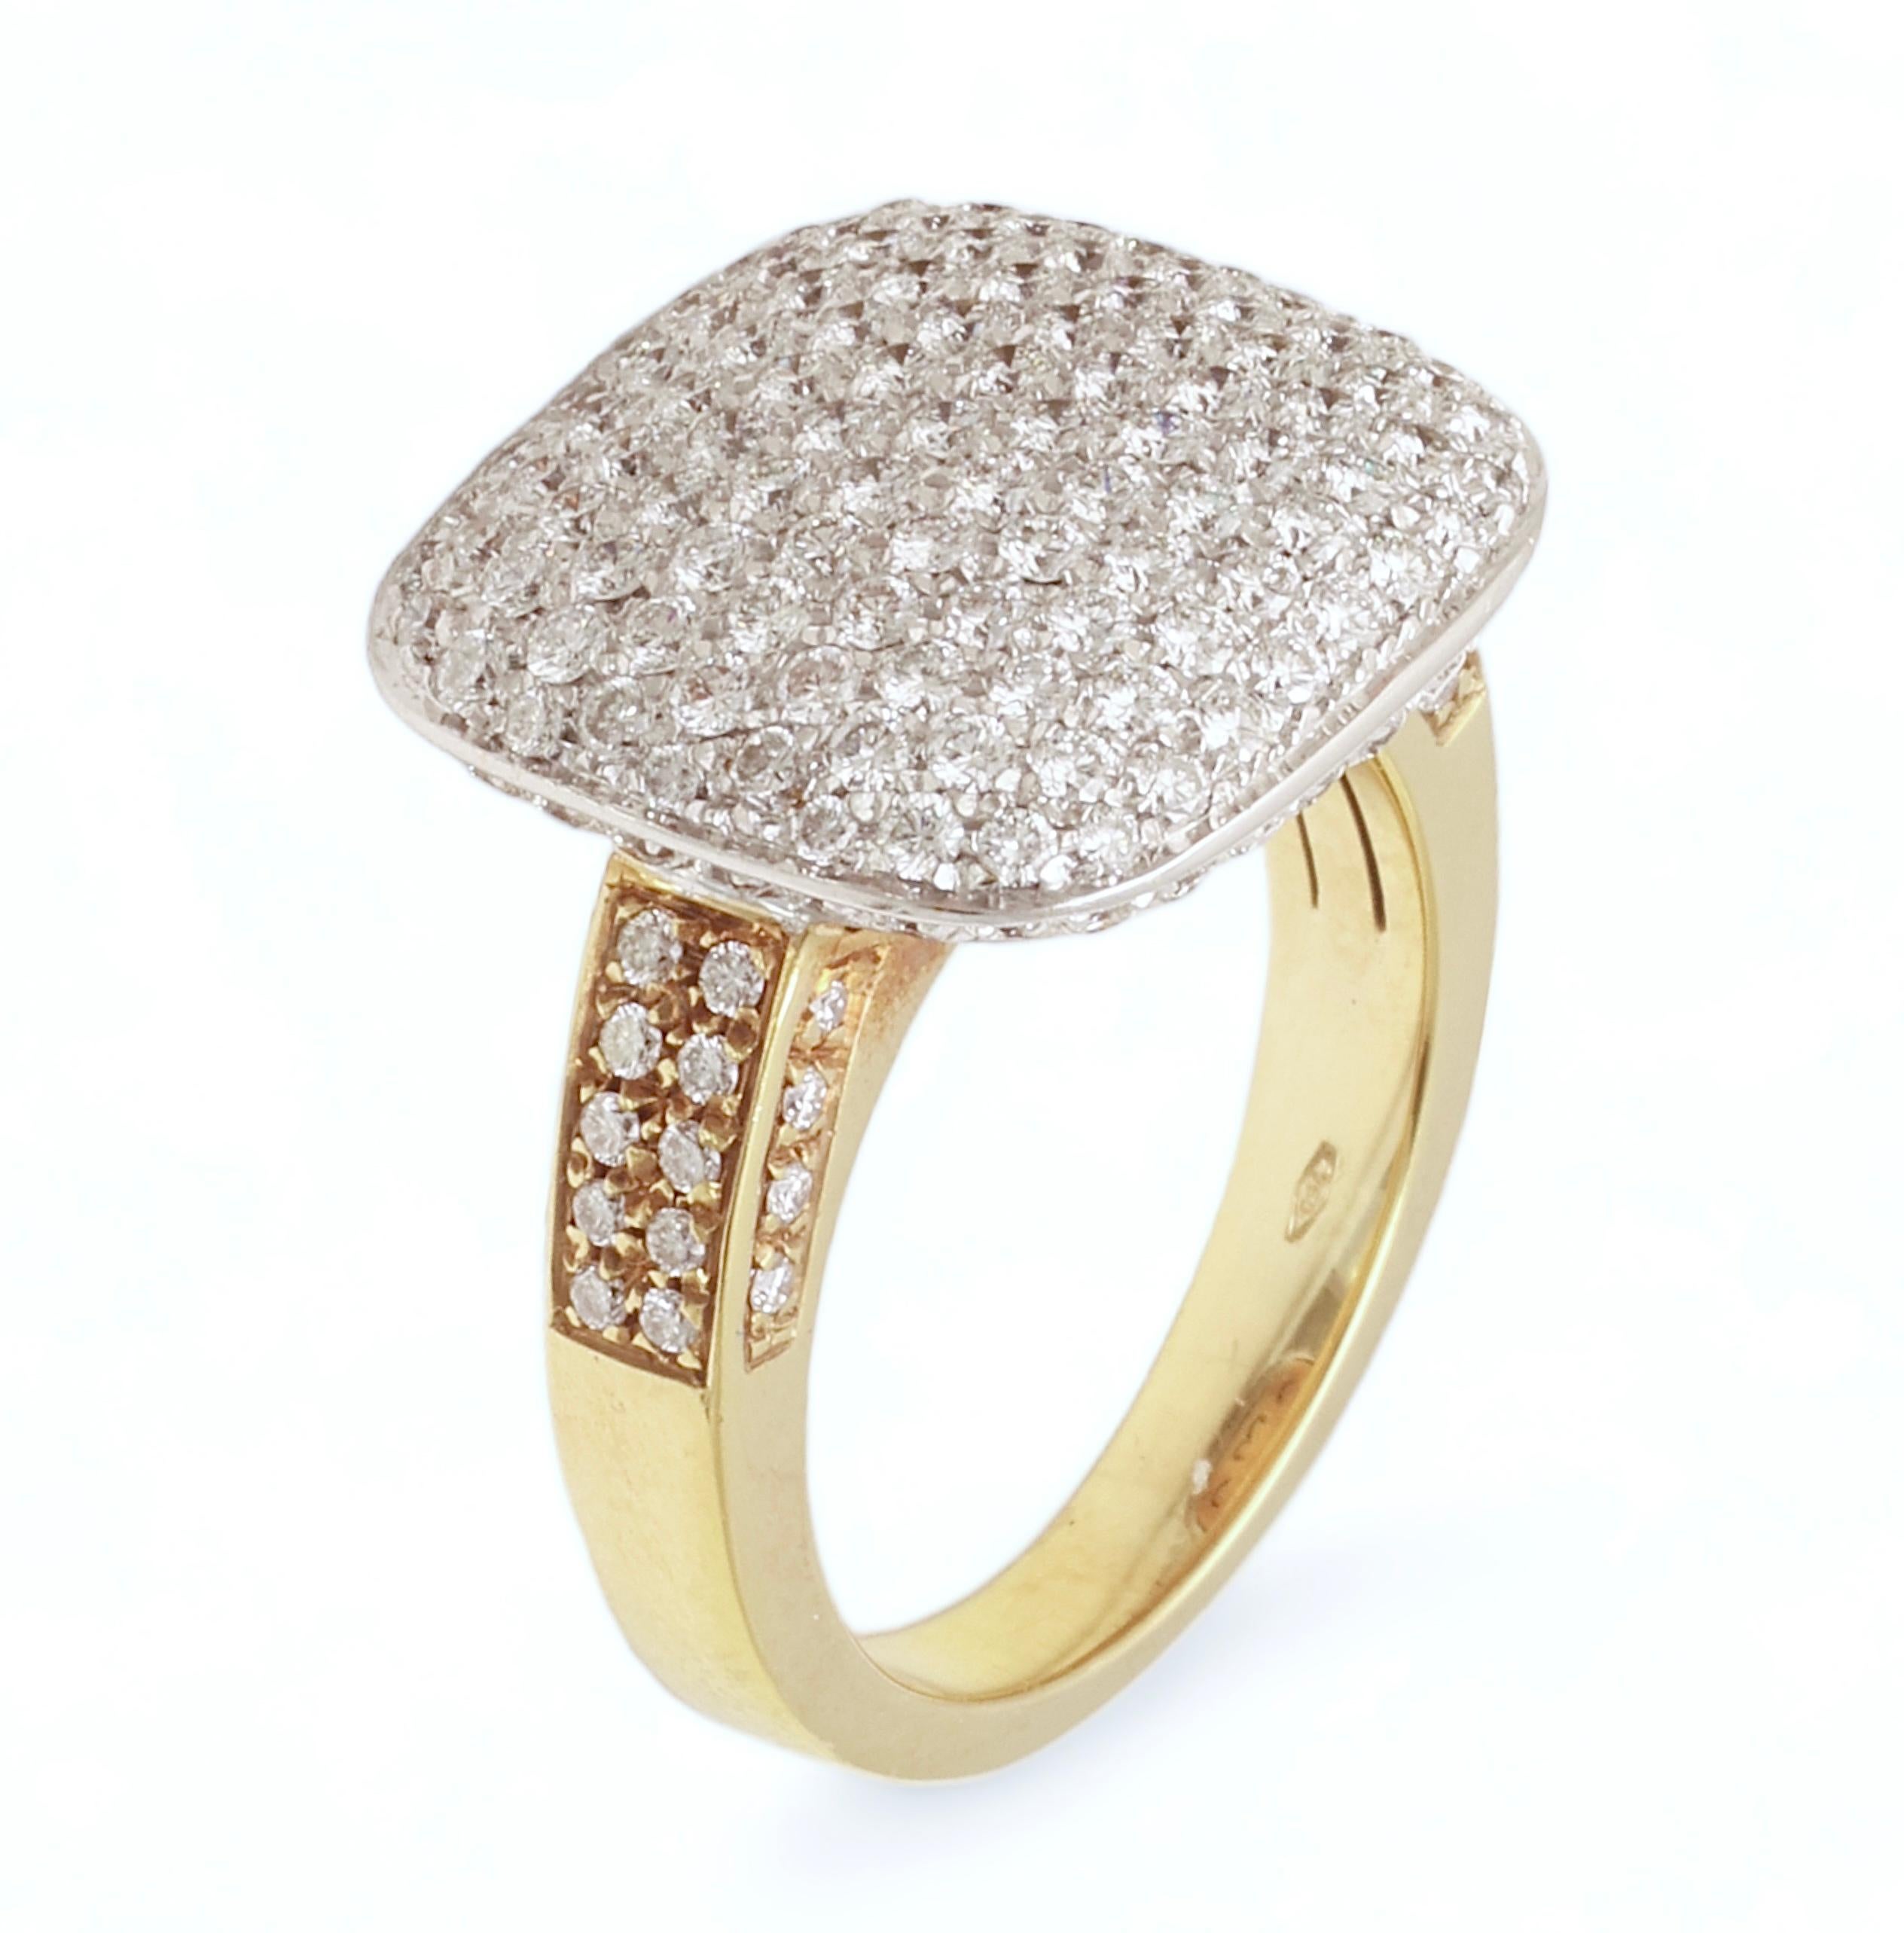  18 kt. Hulchi Belluni Bi color Ring Set with 2.4 ct. Brilliant cut Diamonds  For Sale 2